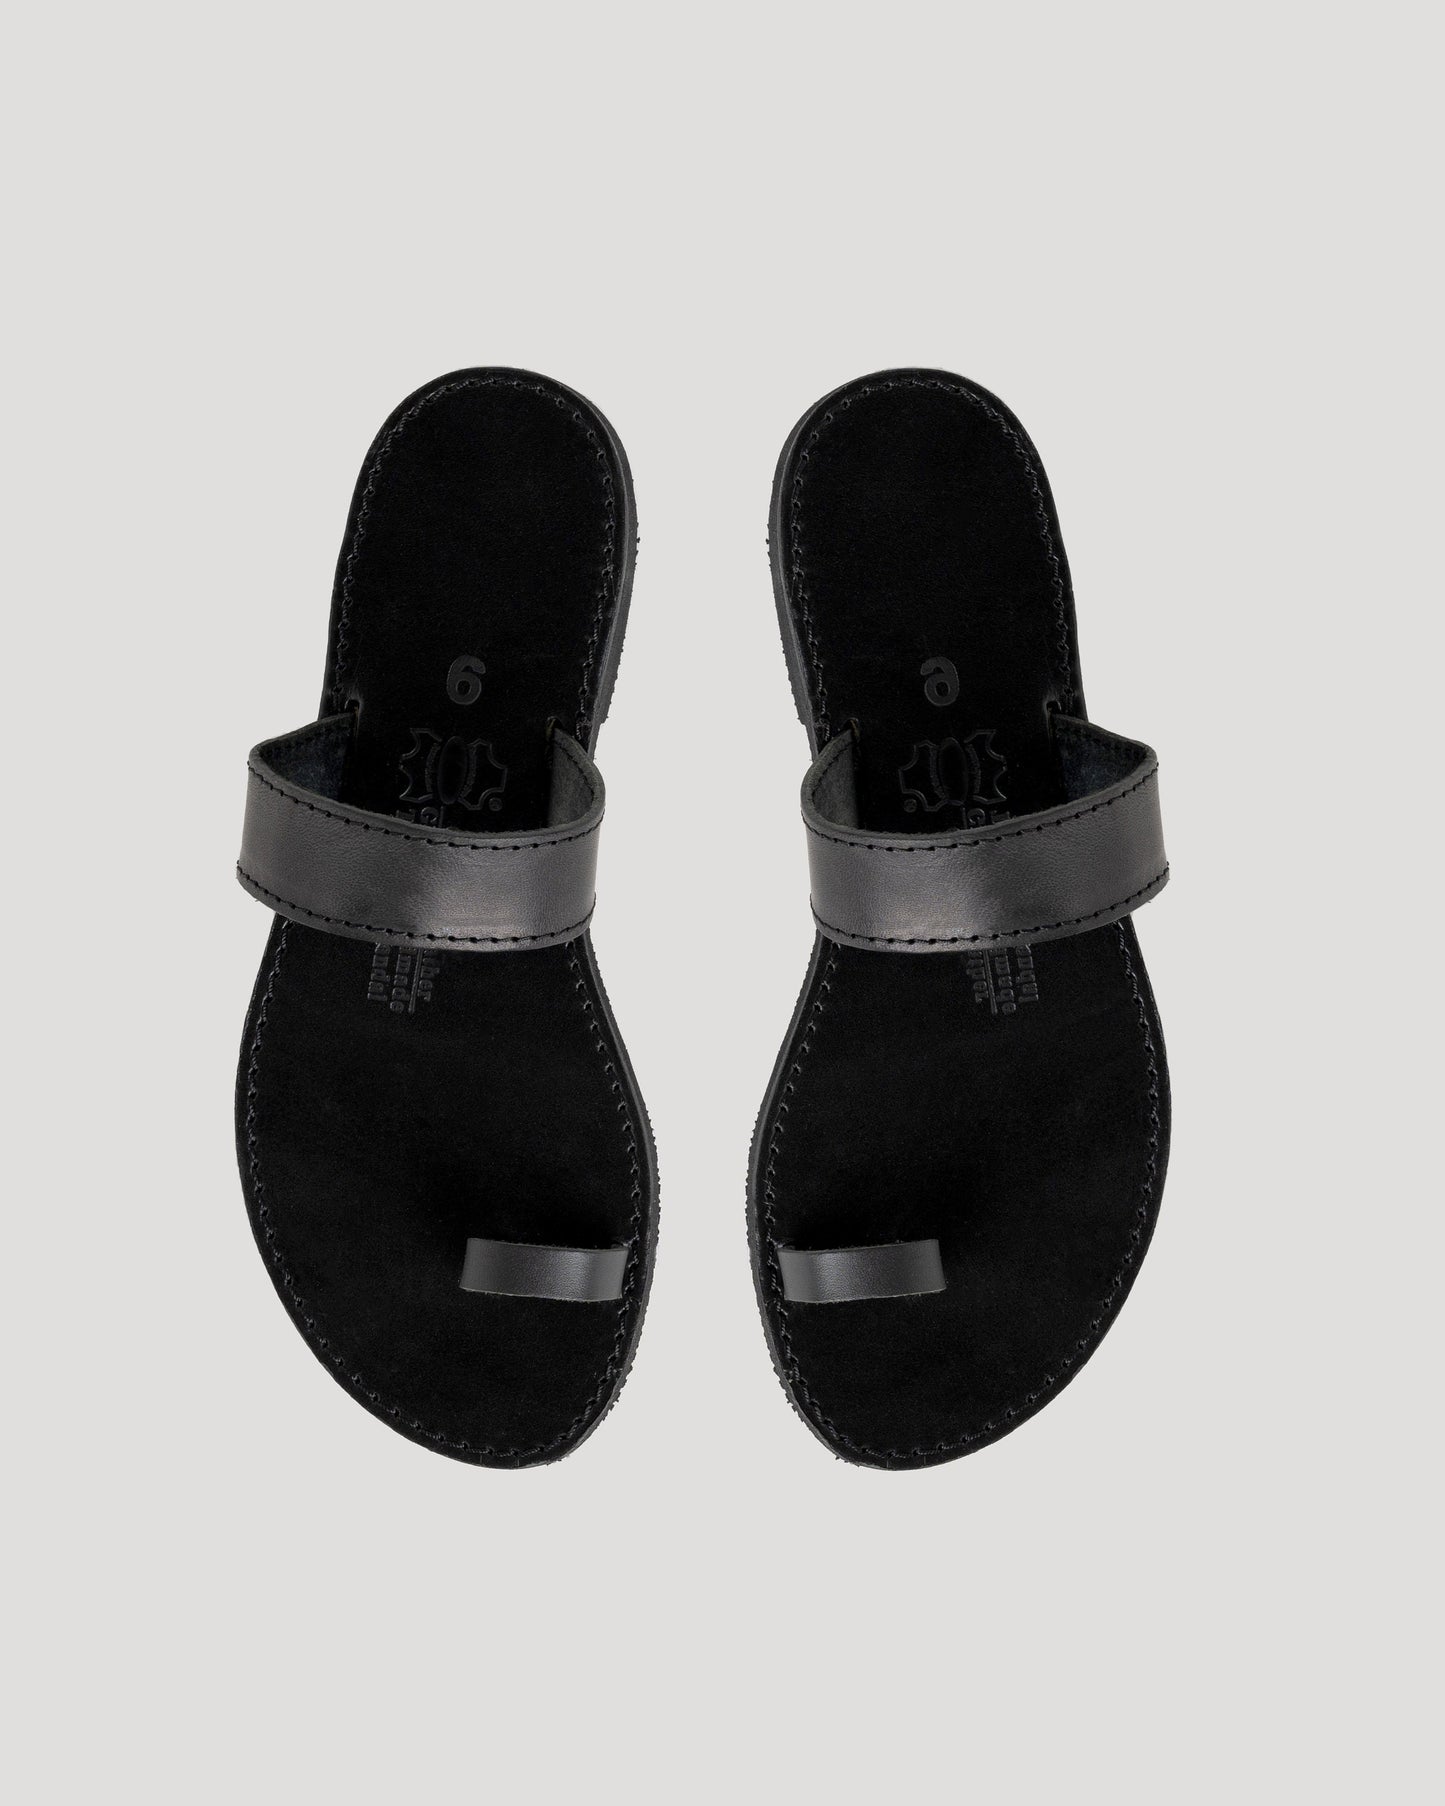 Womens toe ring leather sandals, Greek leather sandals flats, Summer leather shoes, Griechische Leder Sandalen